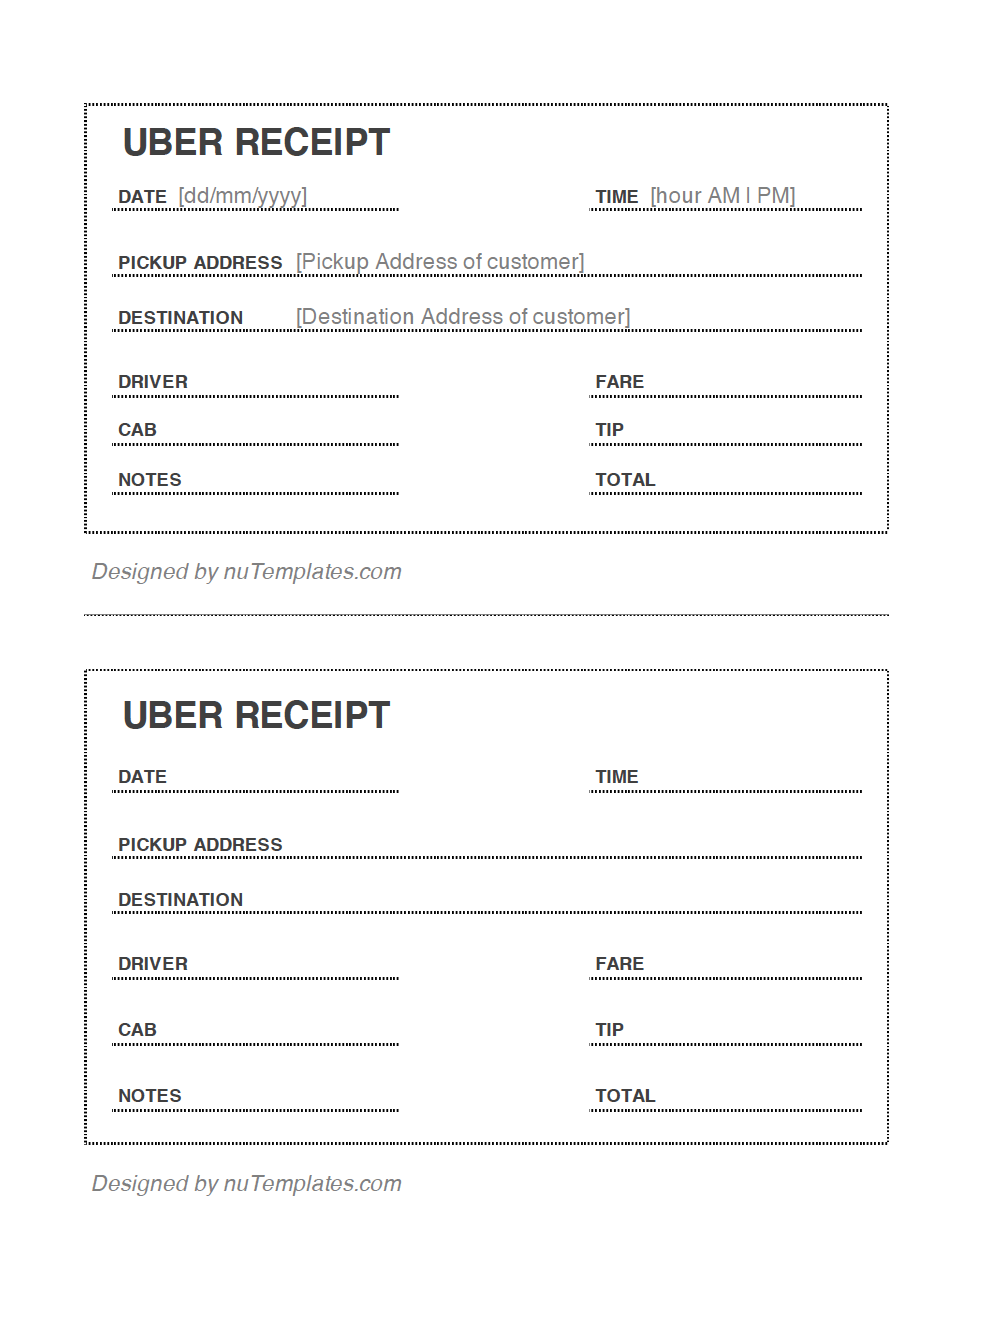 fake-uber-receipt-template